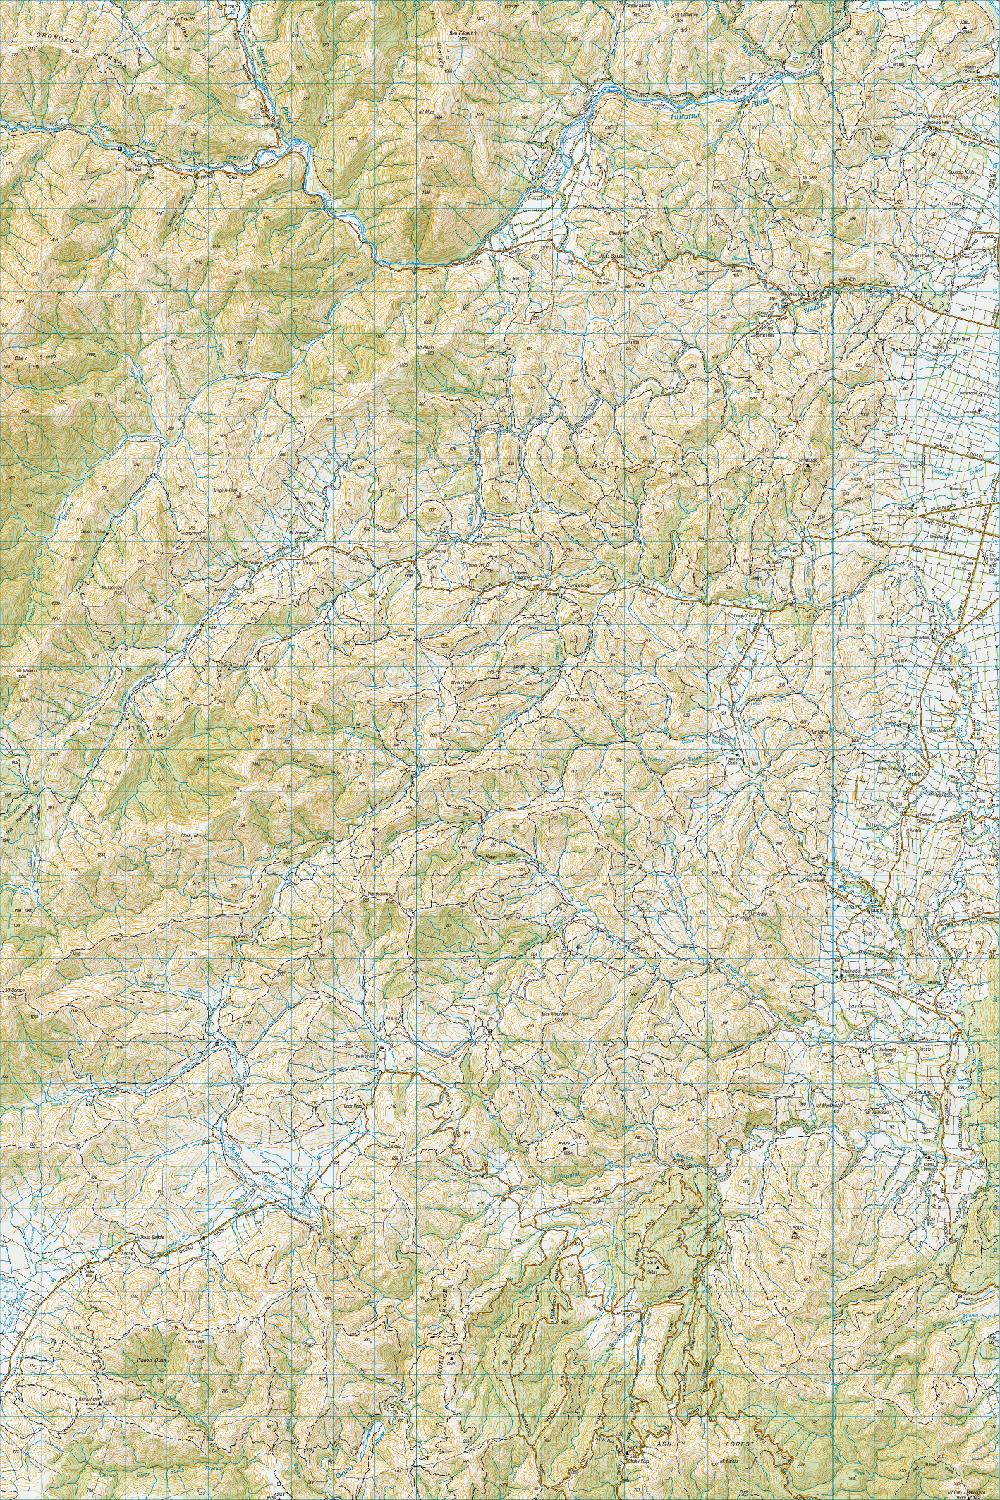 Topo map of Virginia